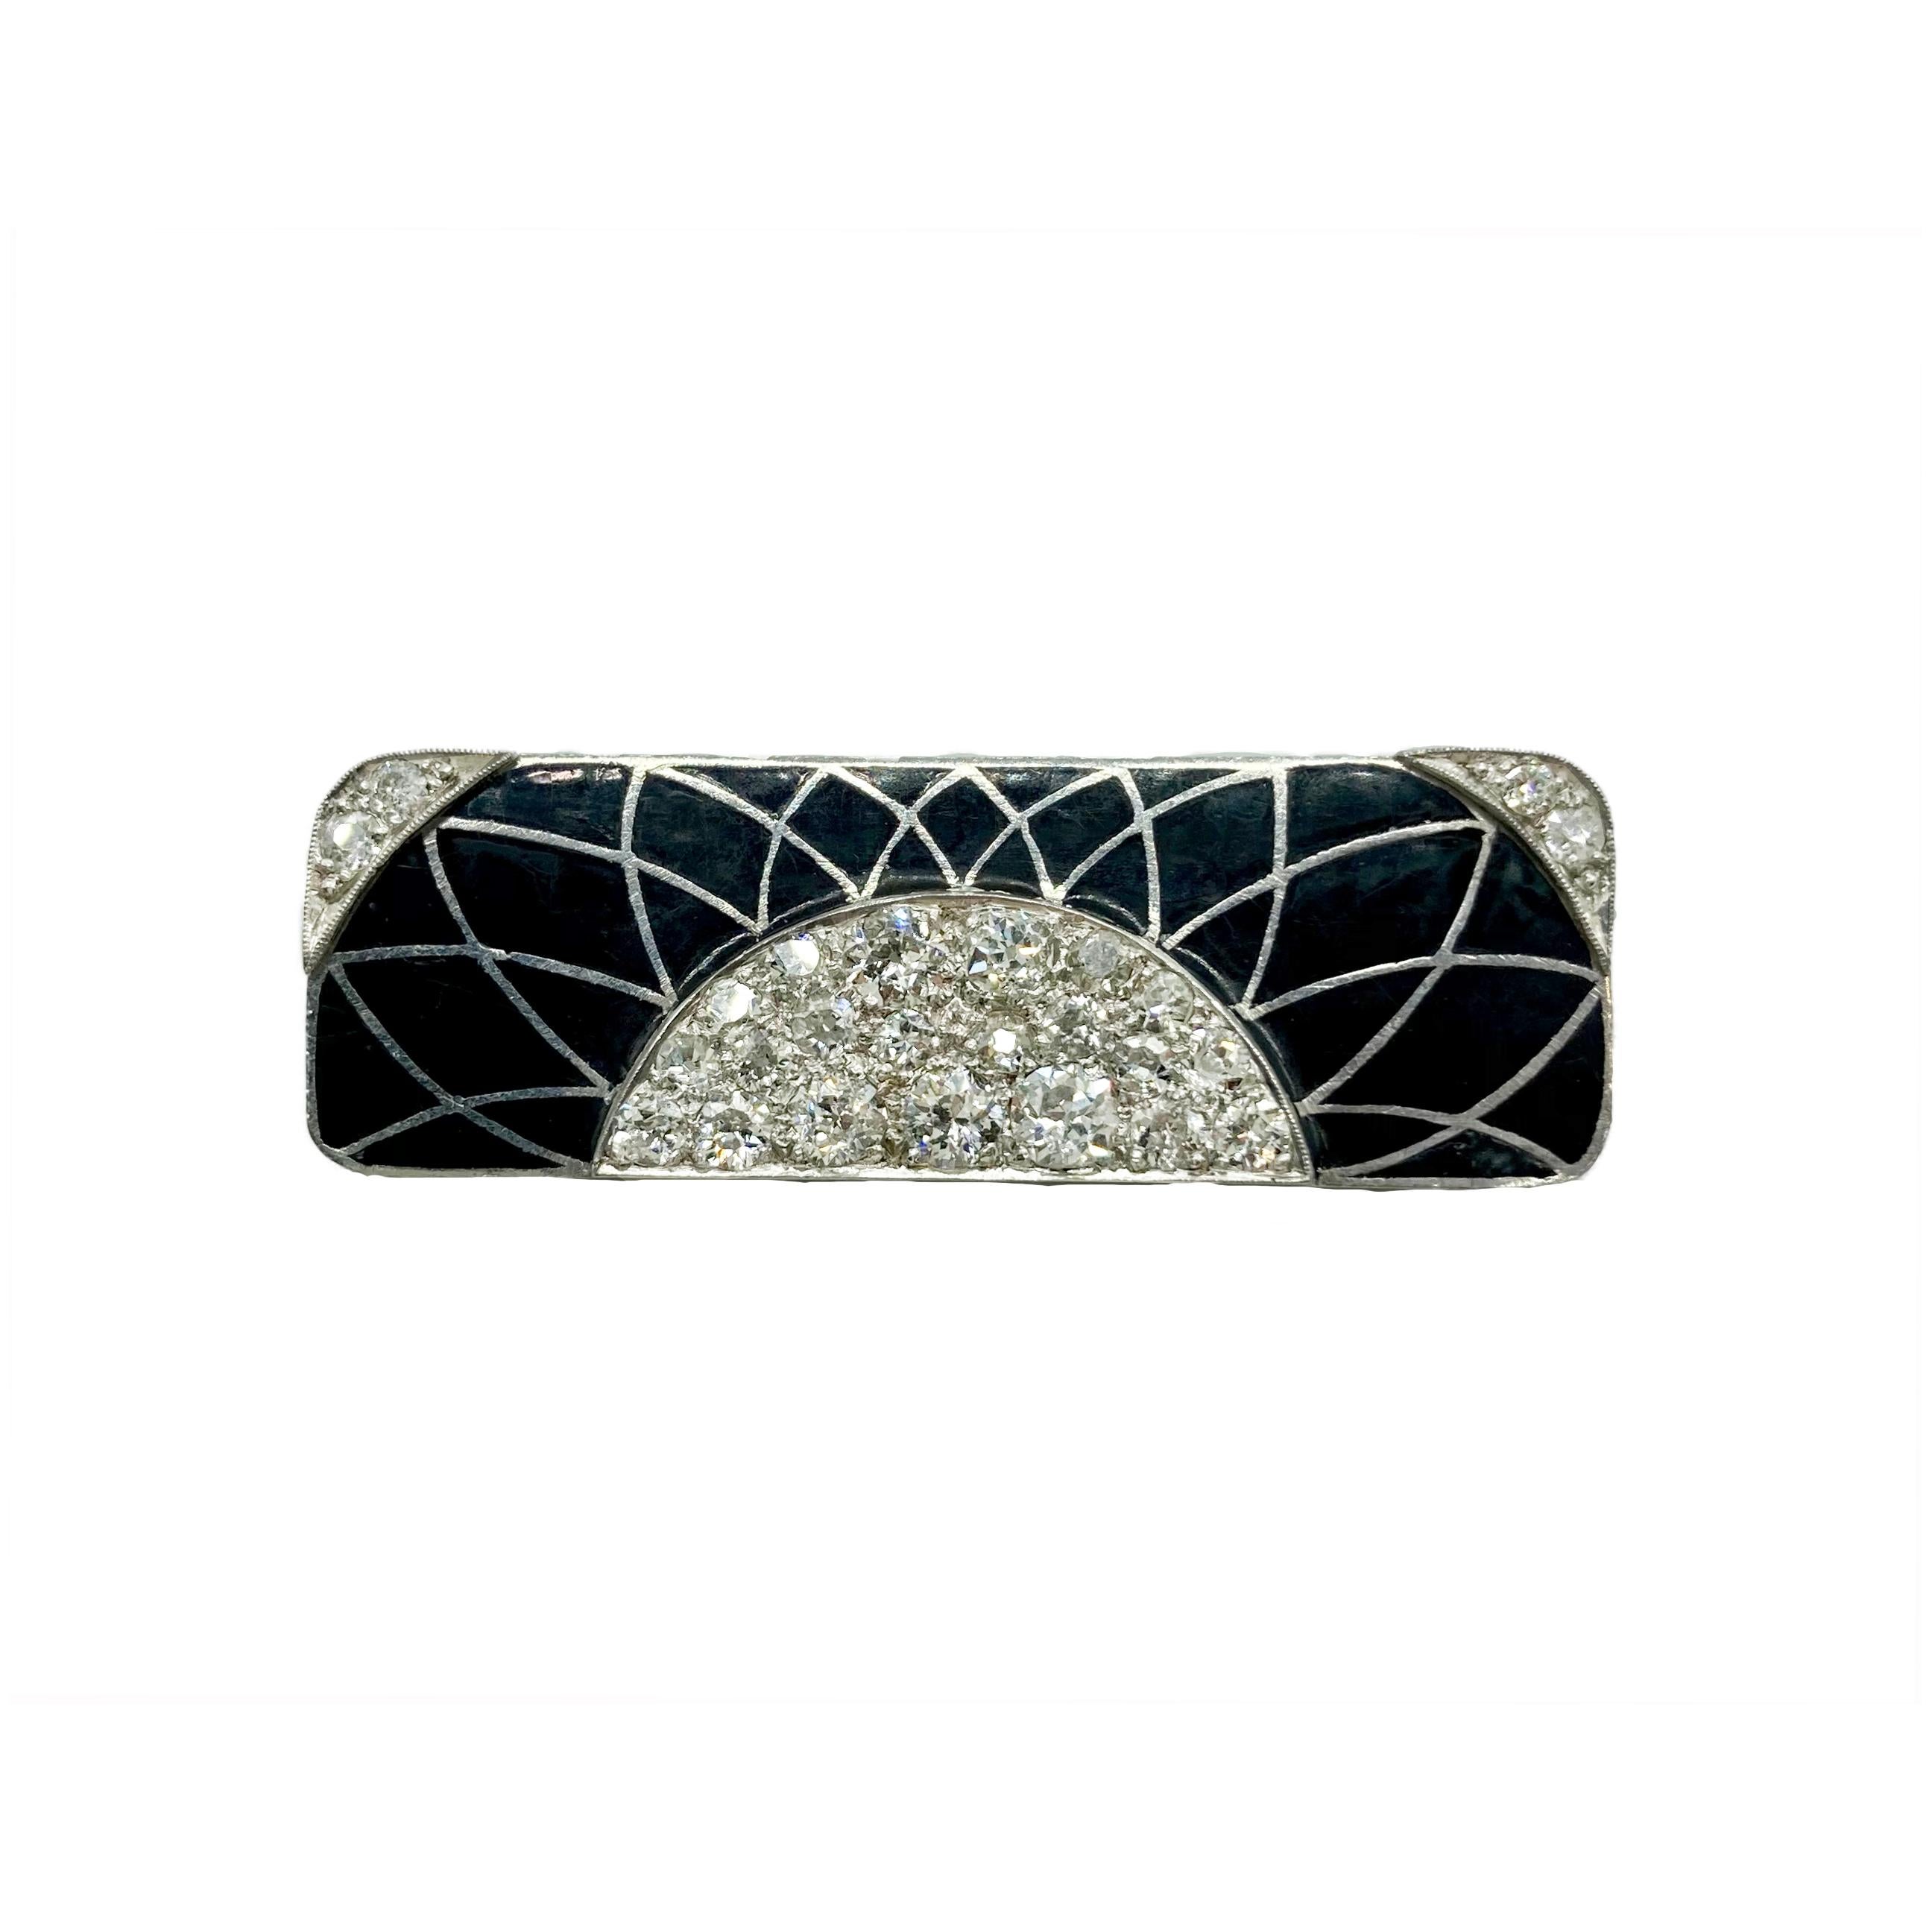 An elegant Art Deco diamond and enamel white gold brooch of geometric design. Circa 1920s.